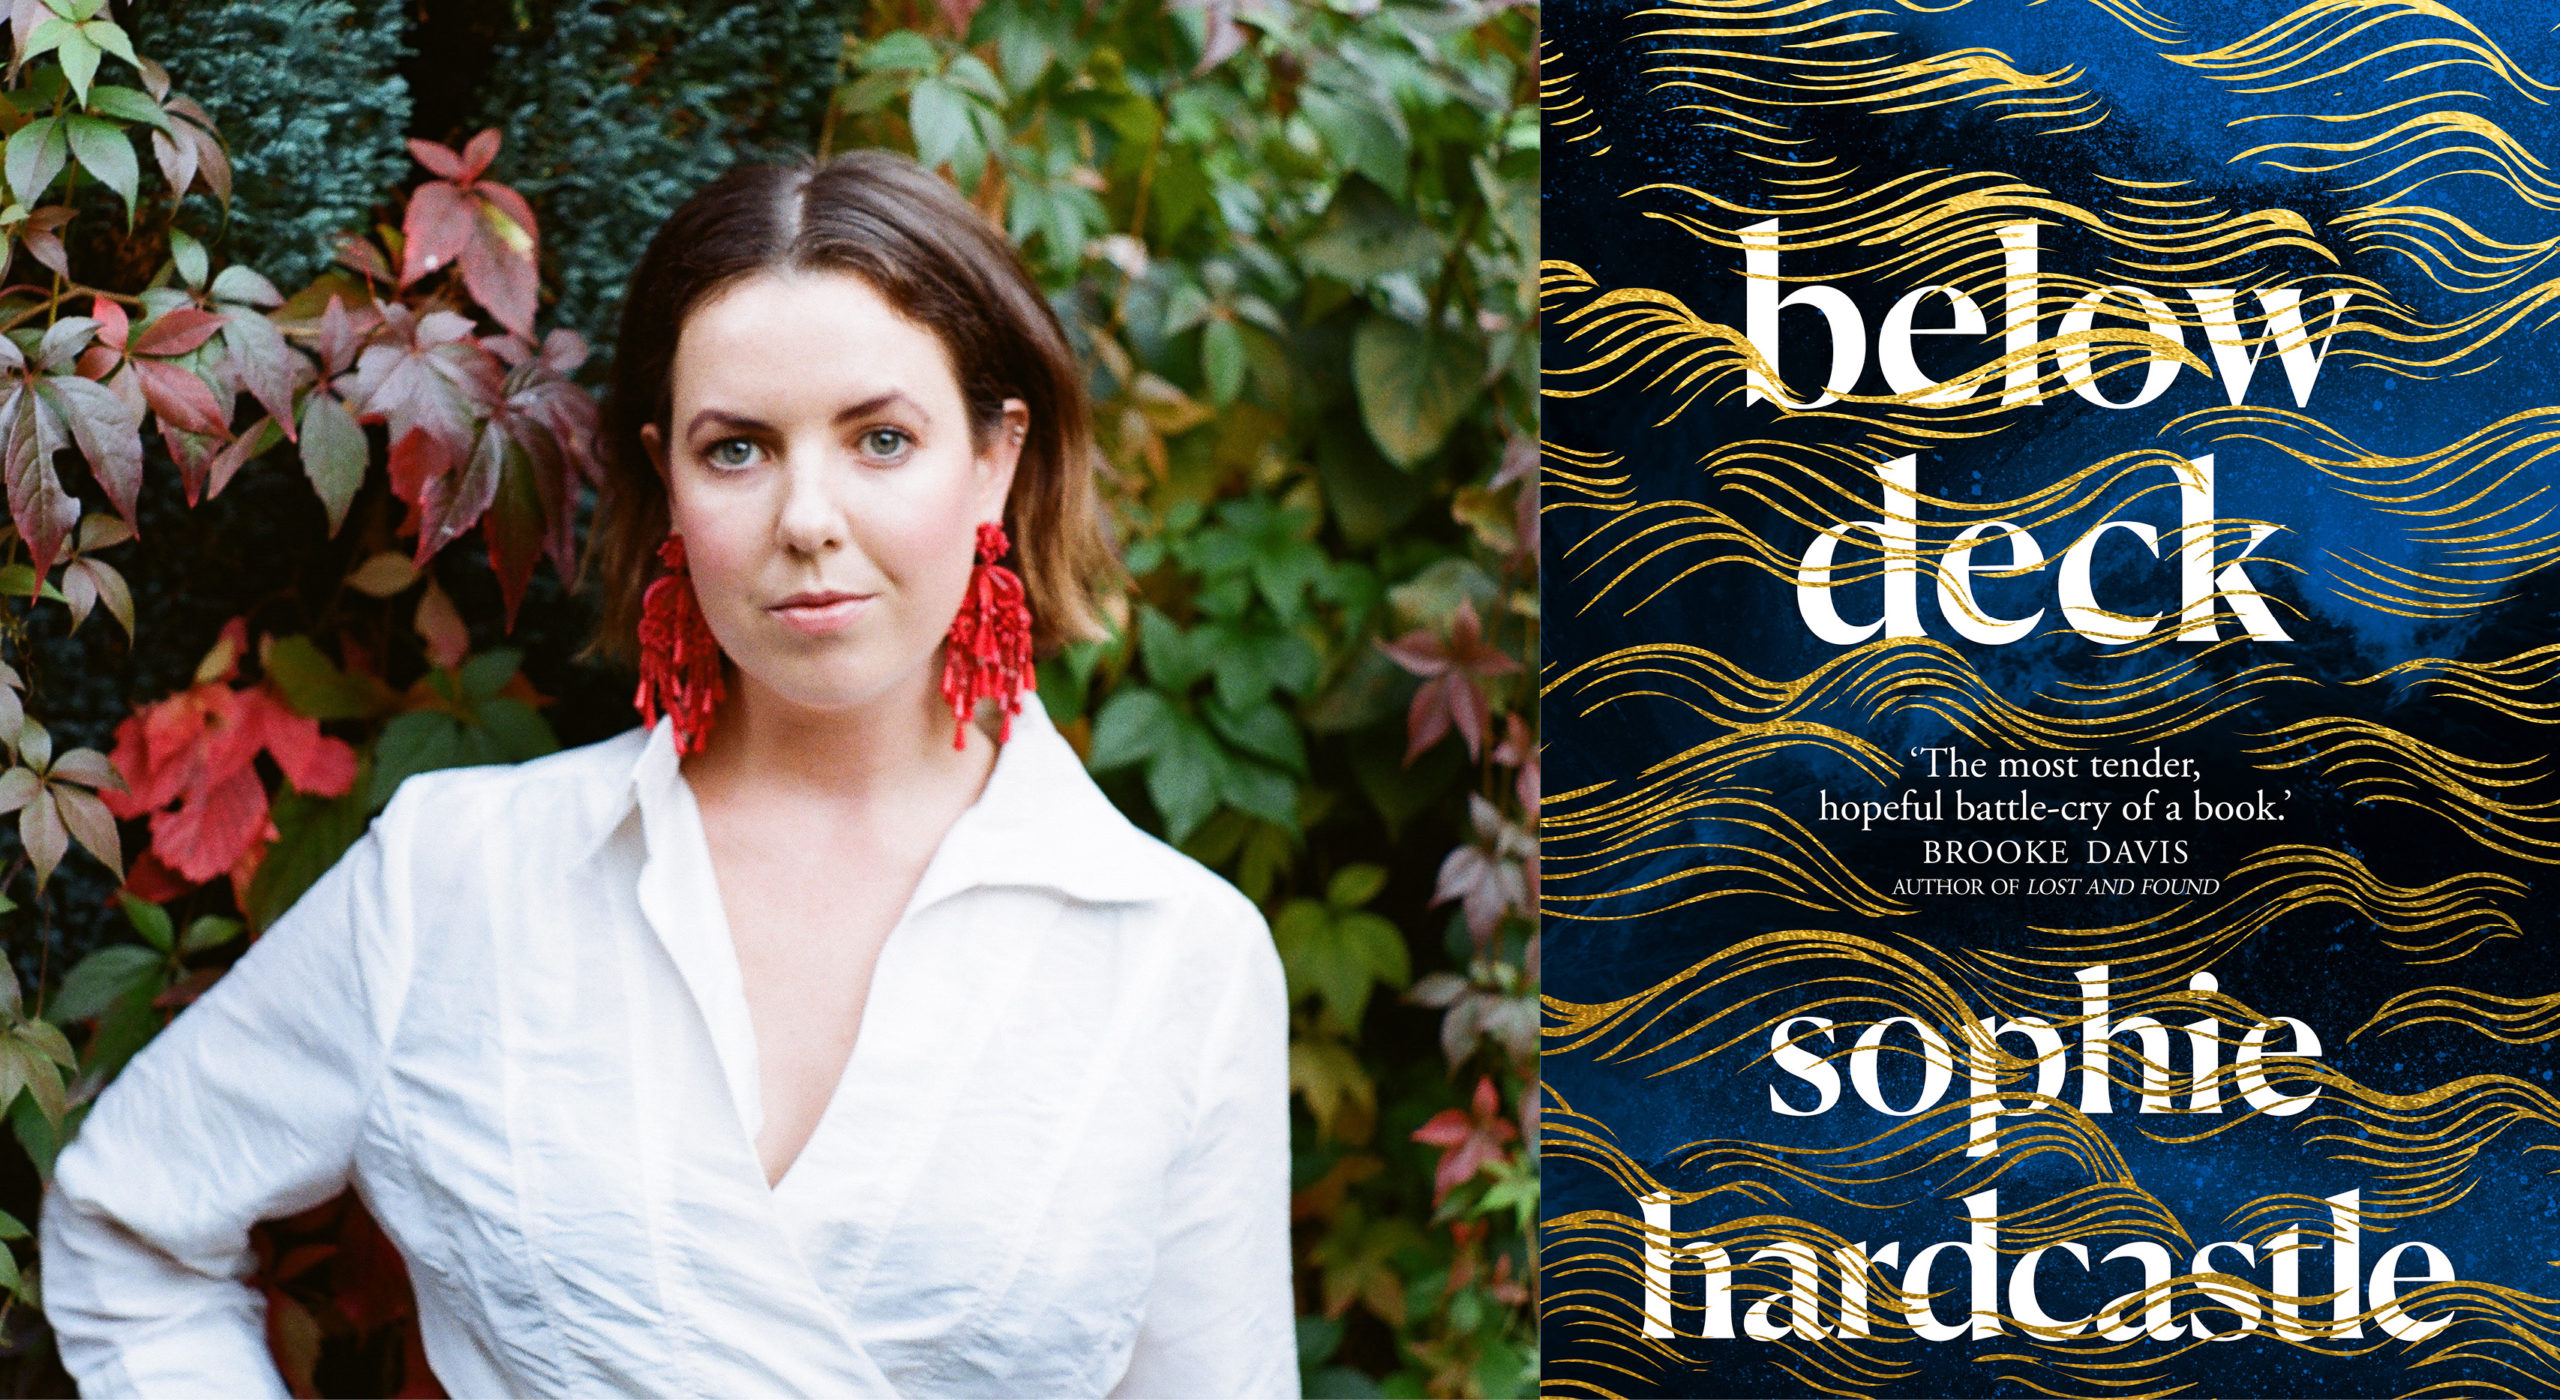 Sophie Hardcastle On Why She Wrote 'Below Deck' | PRIMER